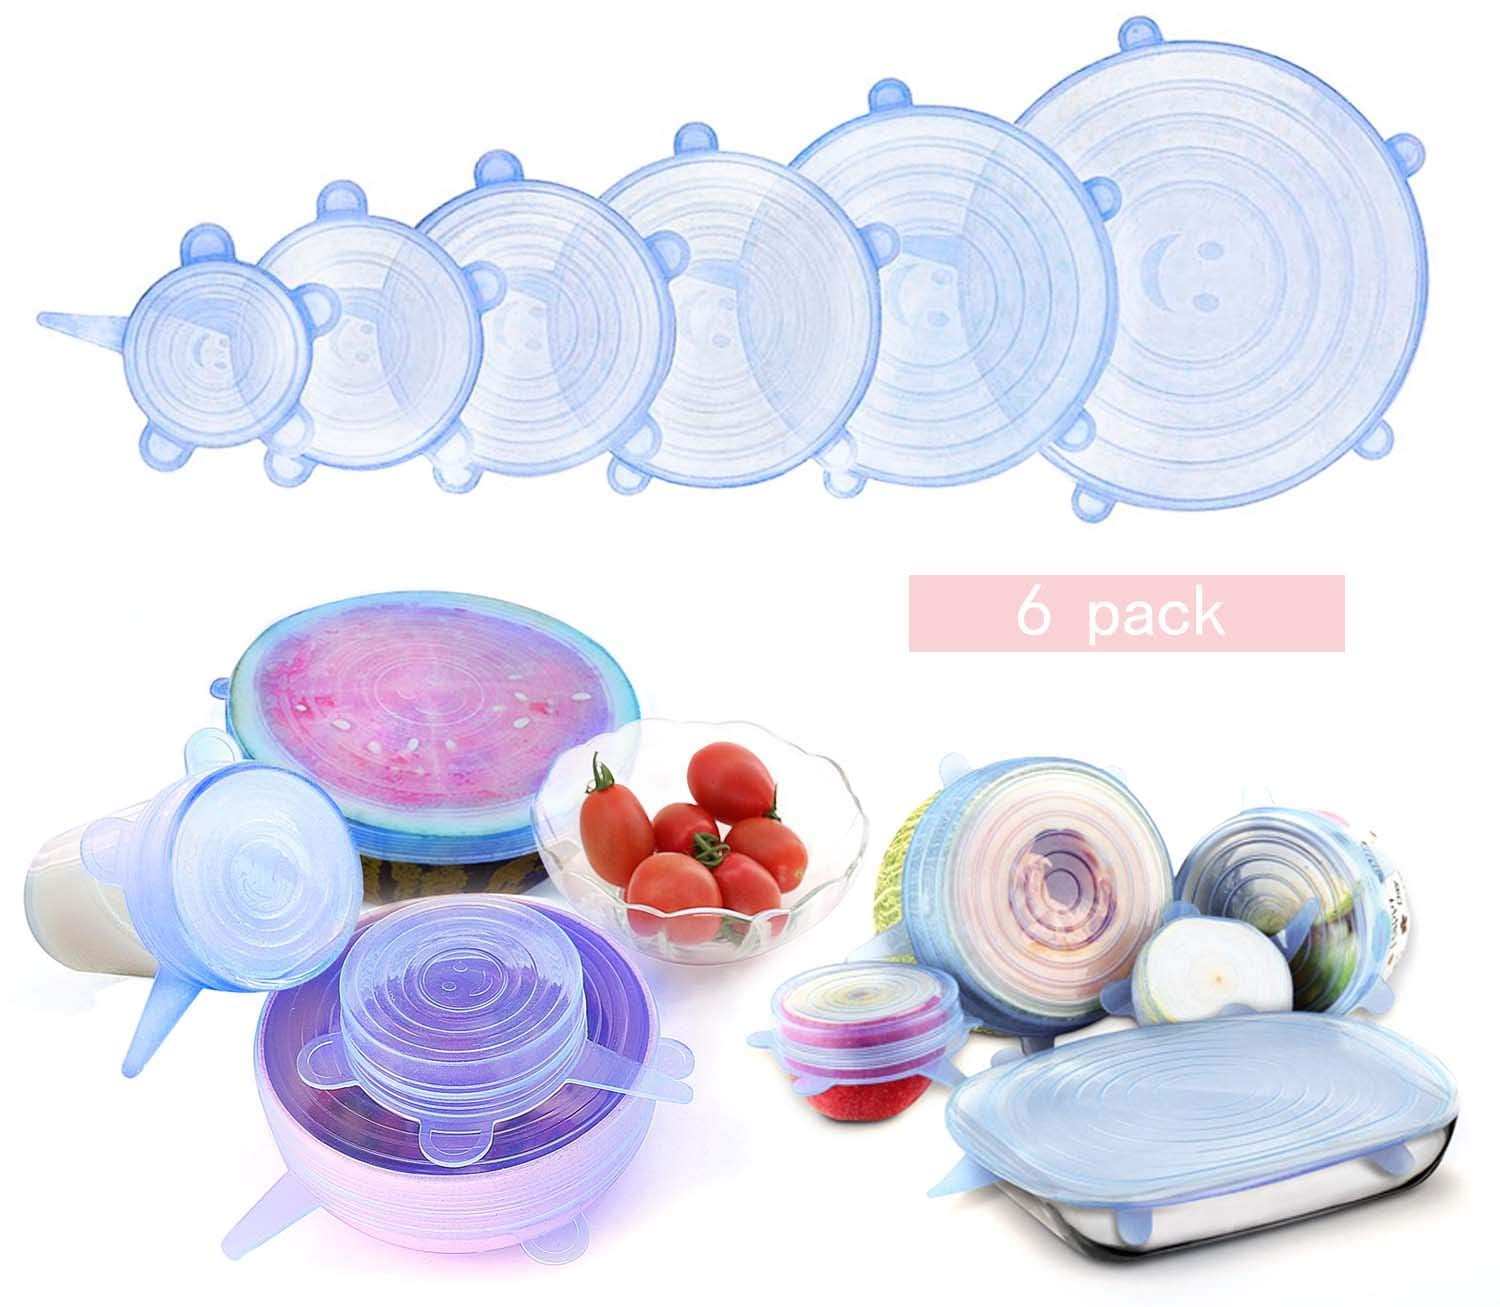 6pcs silicone Stretch Lids food covers Bowl Wrap Cup pot pan microwave Fridge